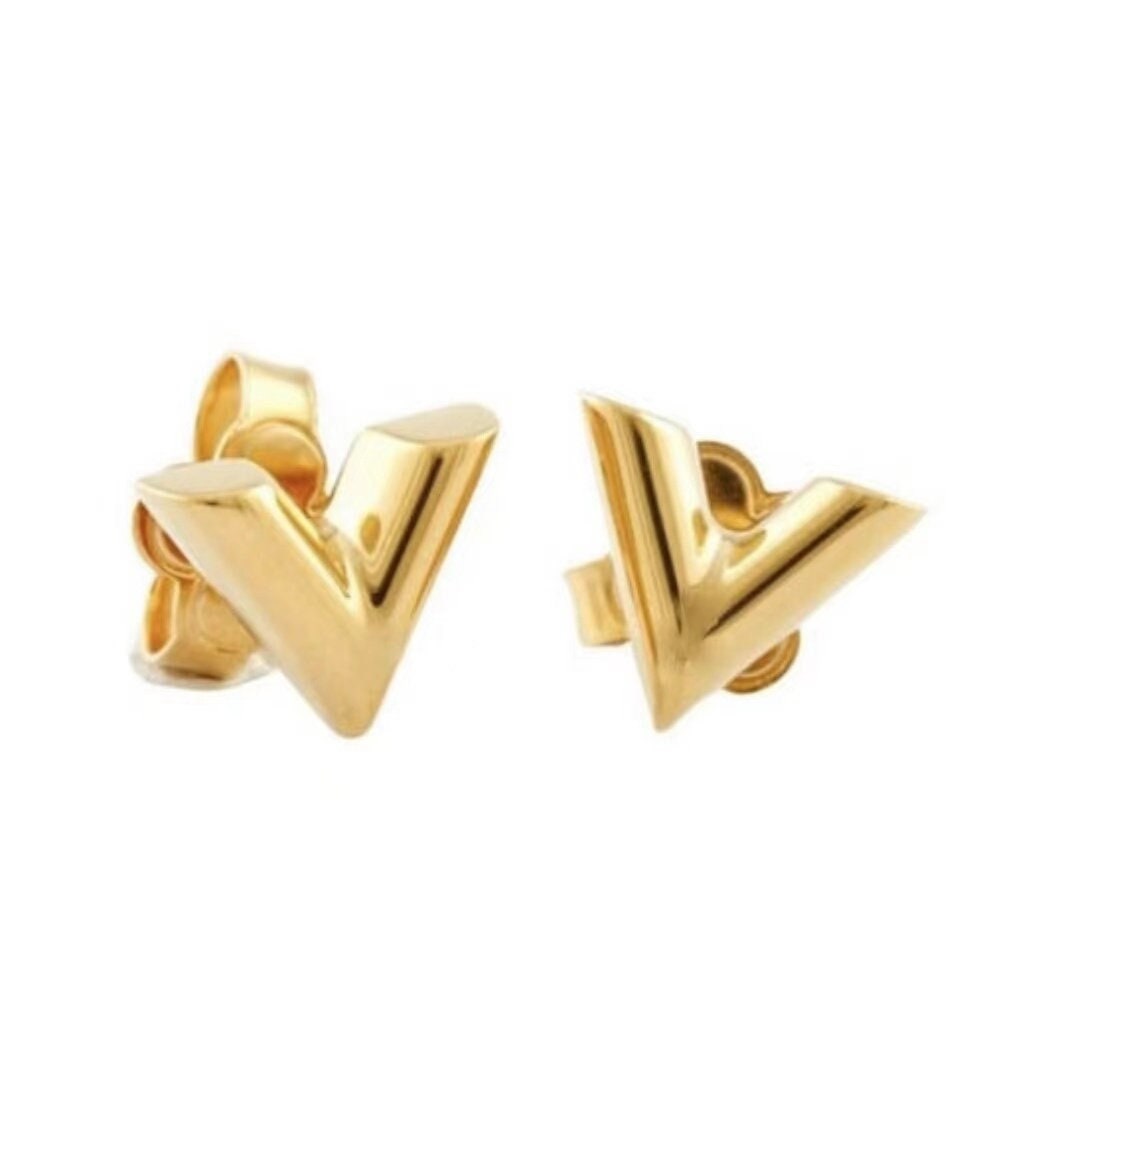 Louis Vuitton Silver Earring Studs 